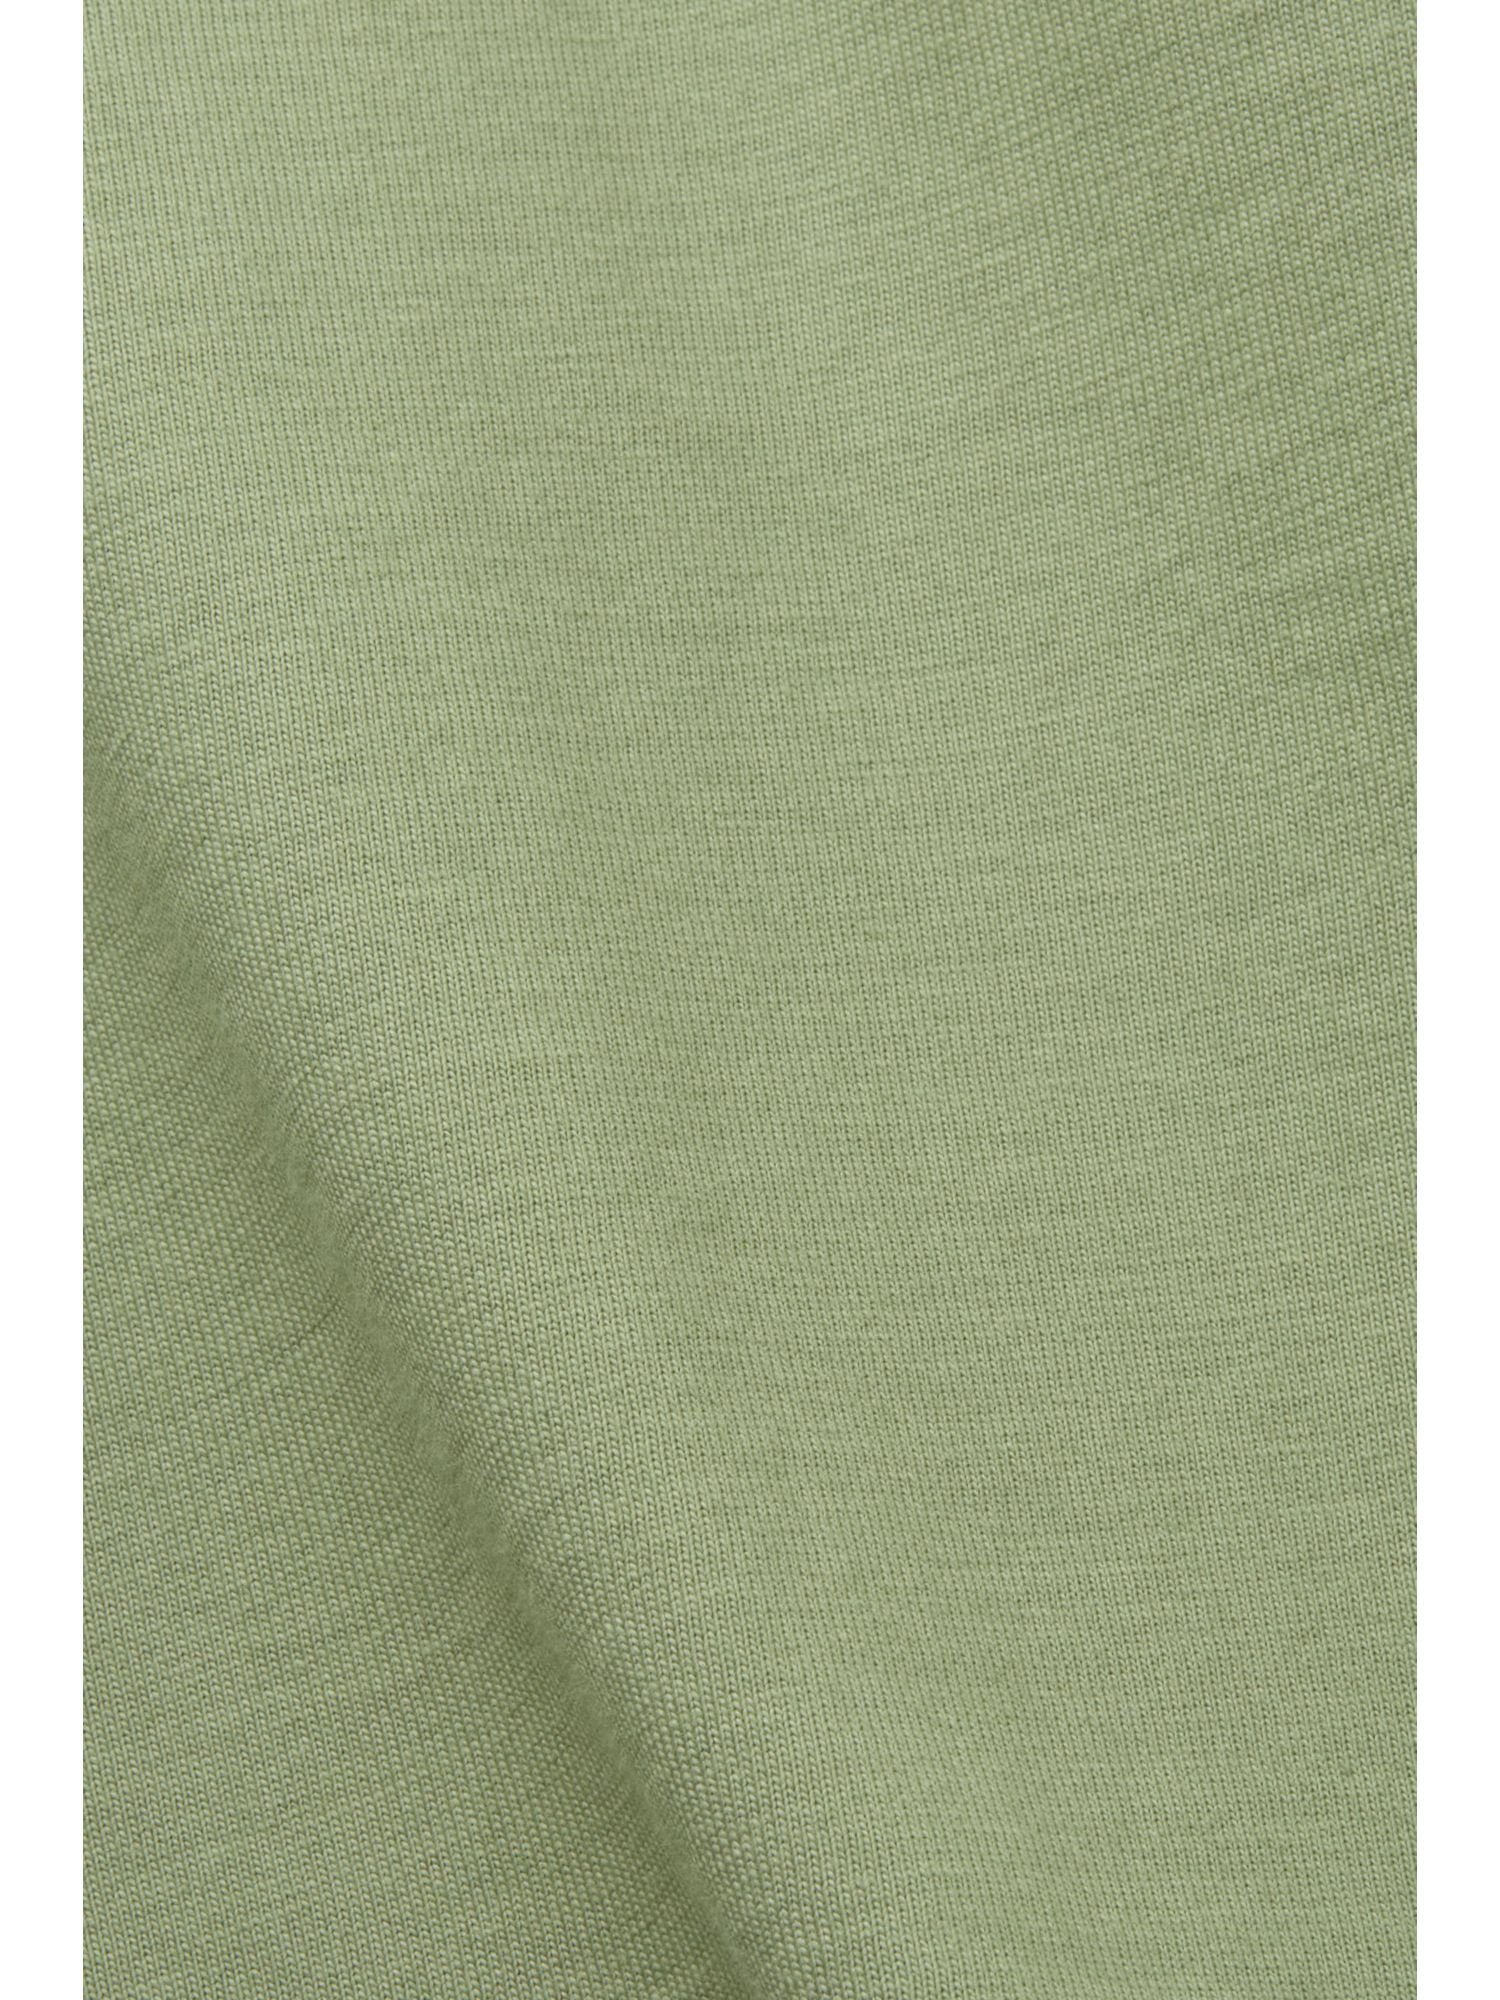 Poloshirt % 100 by aus KHAKI Poloshirt PALE Esprit edc Baumwolle Jersey,